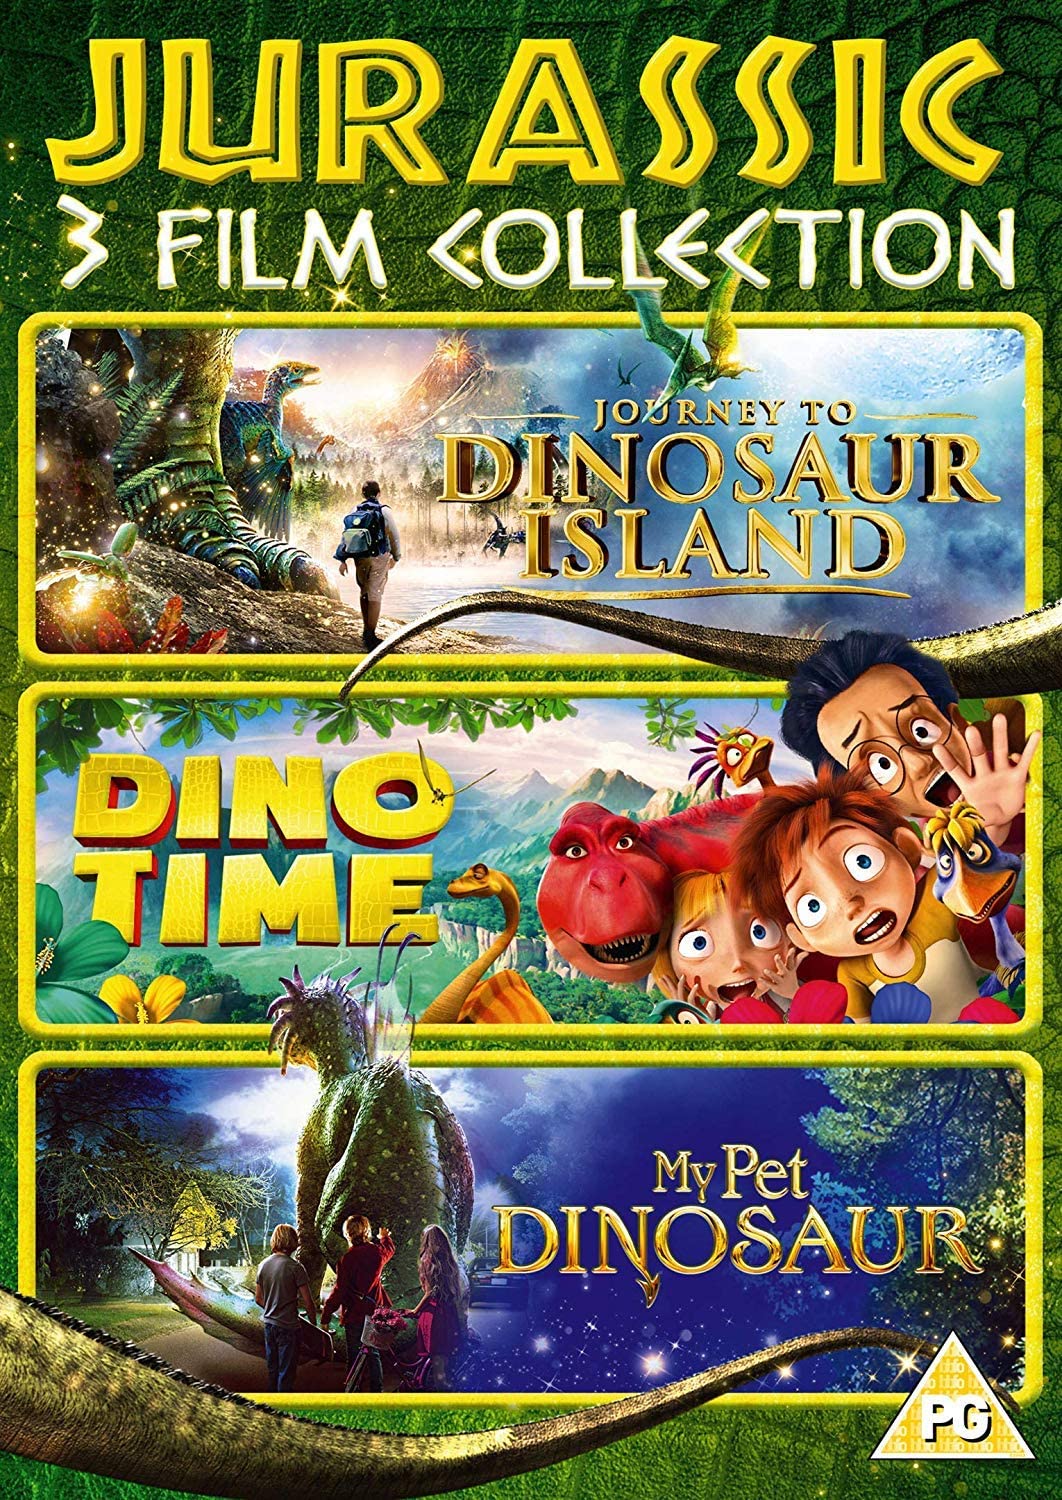 Jurassic 3 Film Collection - Adventure [DVD]